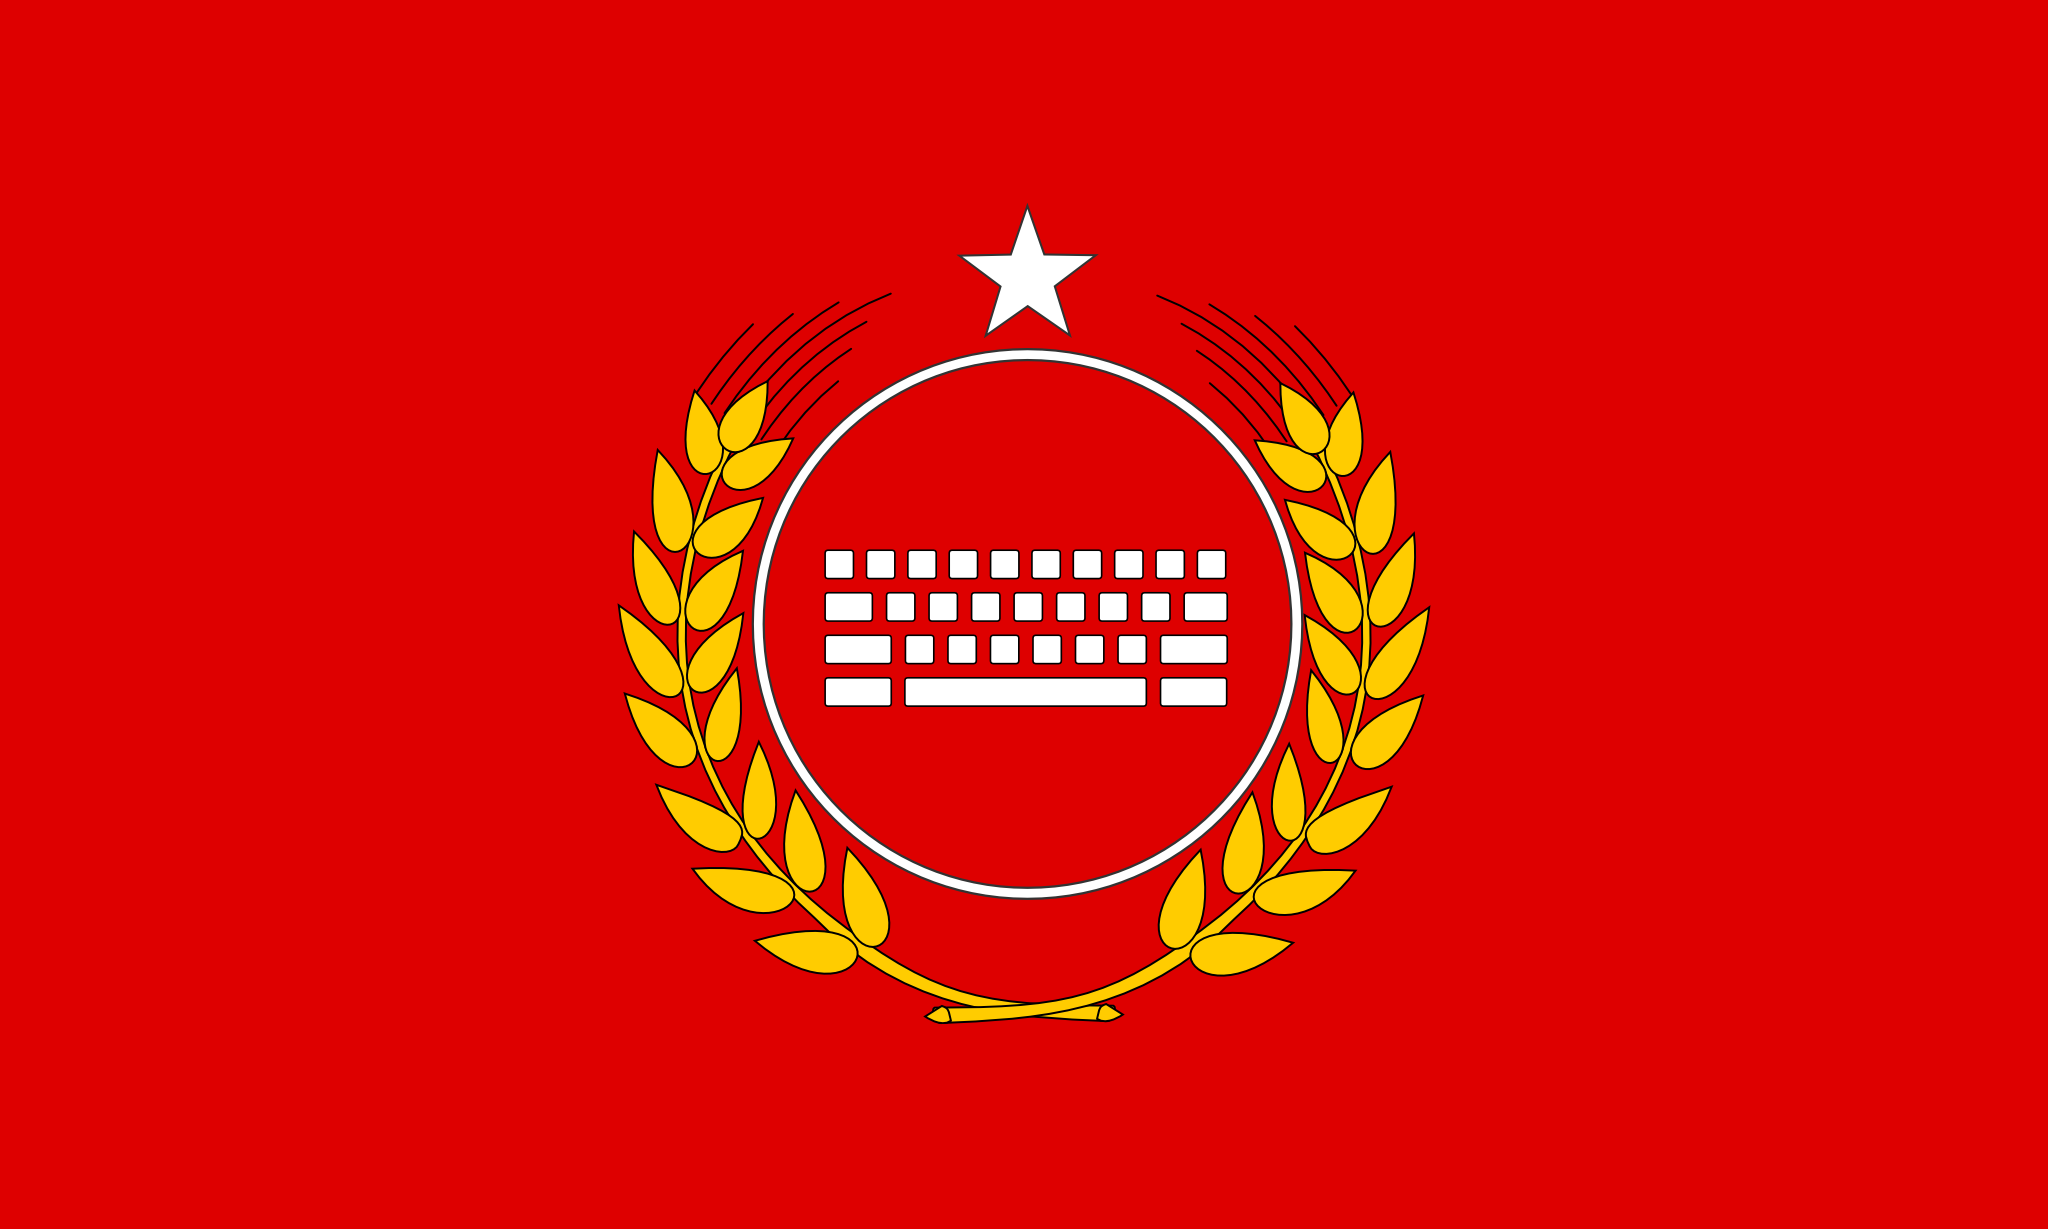 Bandera de nación lumpen